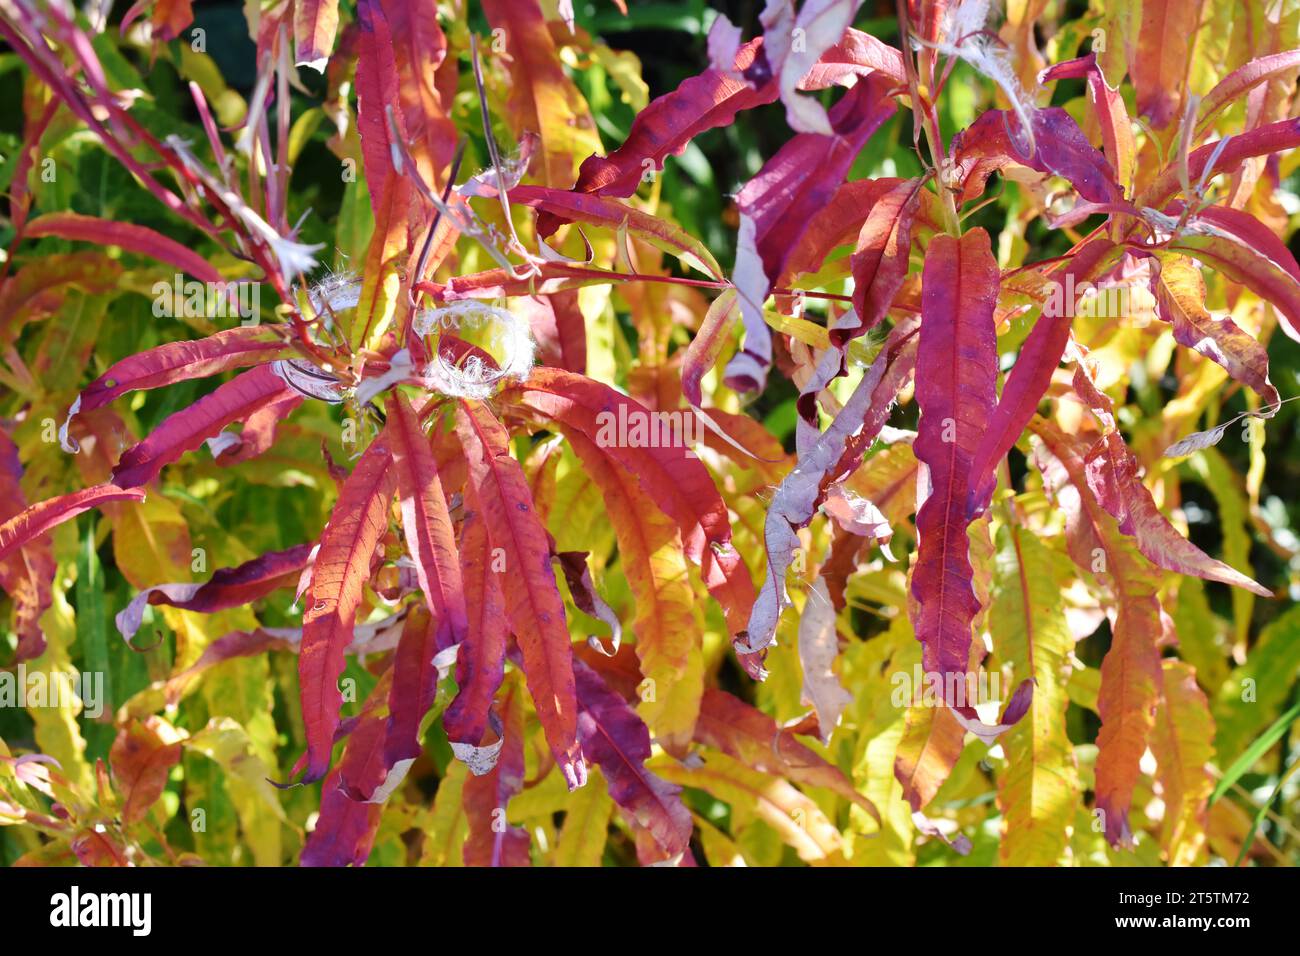 Rosebay willowherb Chamerion angustifolium autumn colored leaves Stock Photo